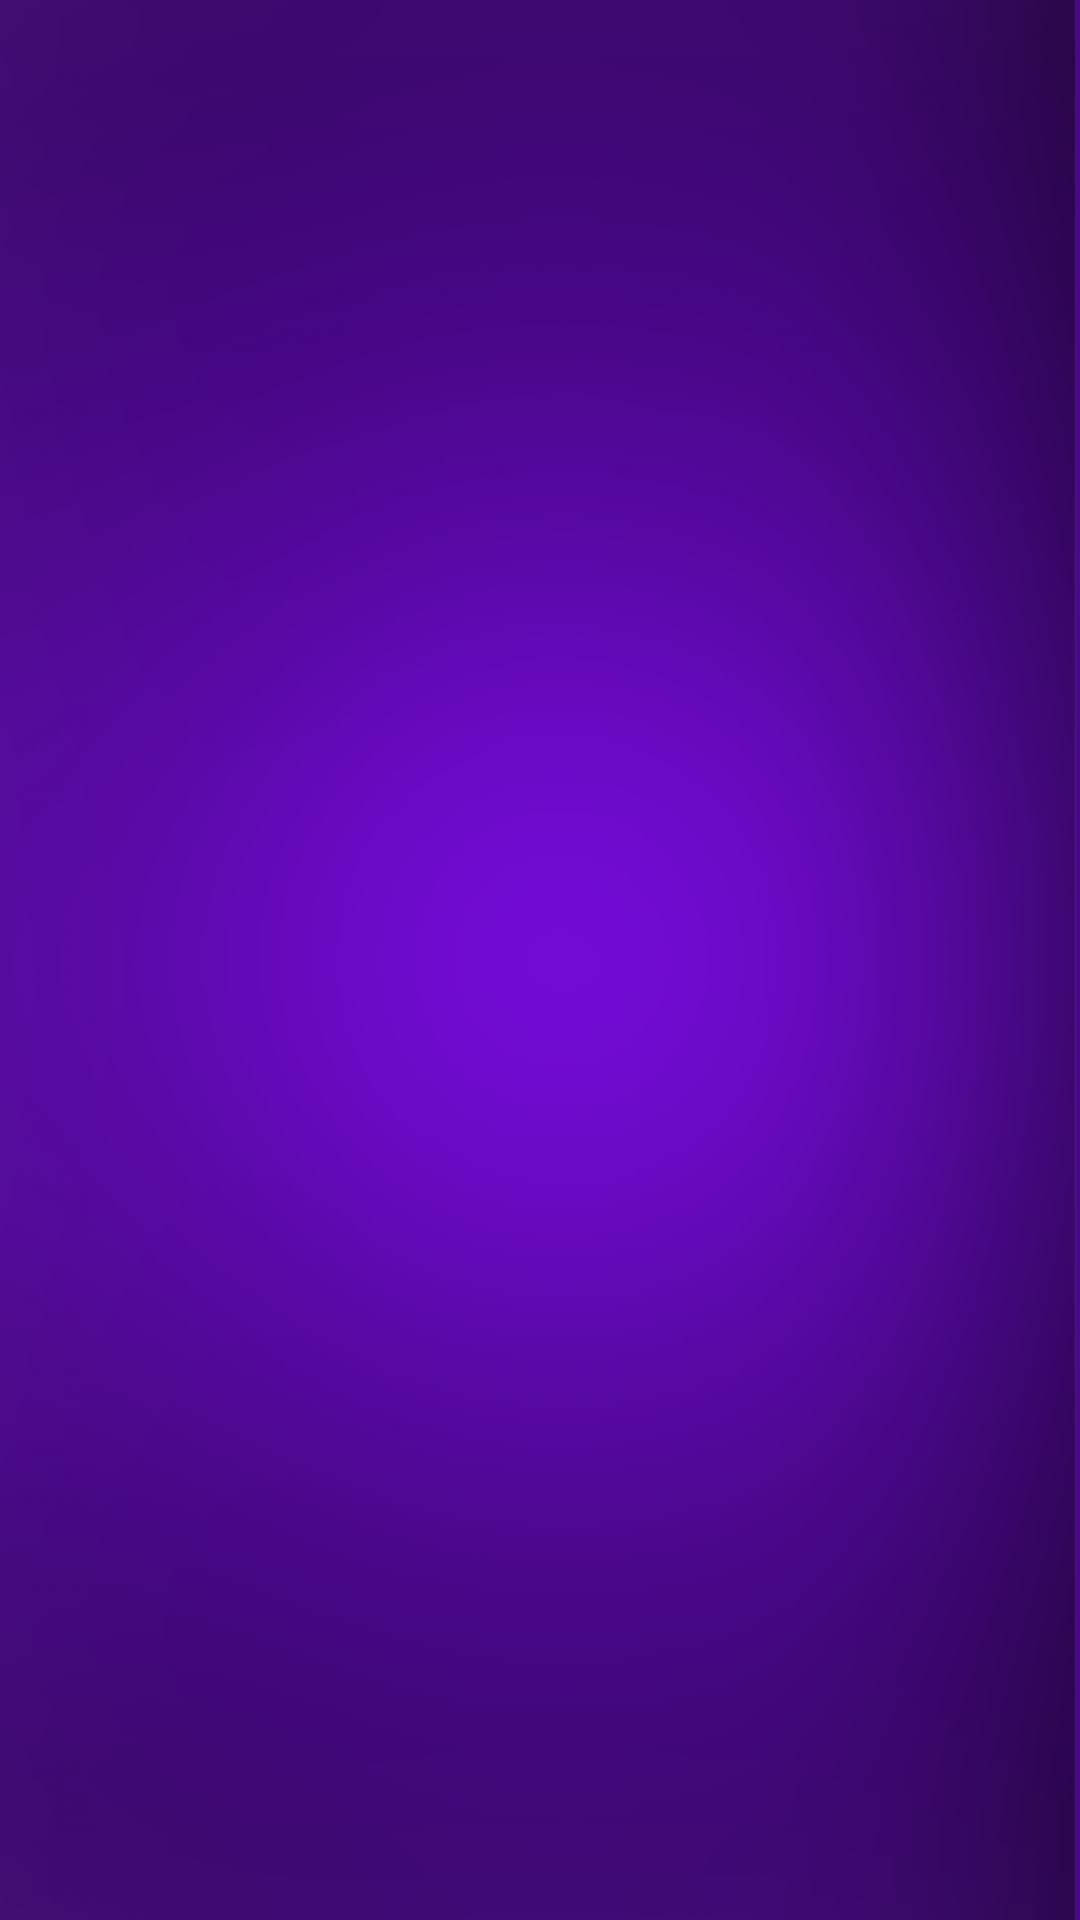 Sleek Violet Iphone With Minimalist Design